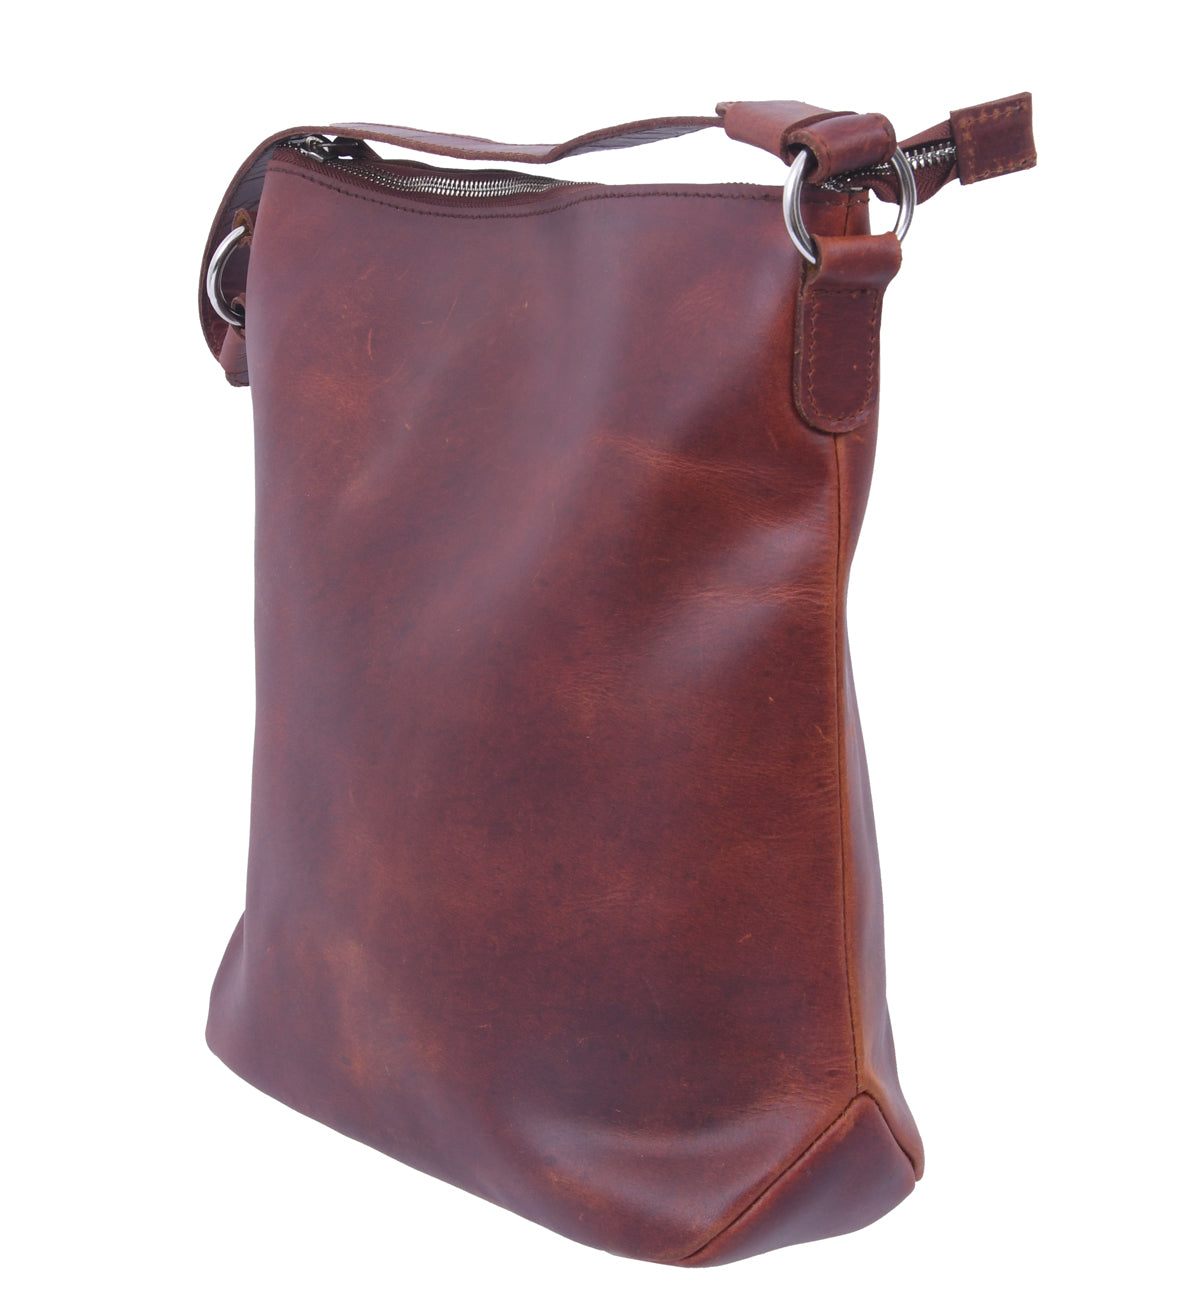 Brown Leather Sling Bag: The Classic Companion. - CELTICINDIA